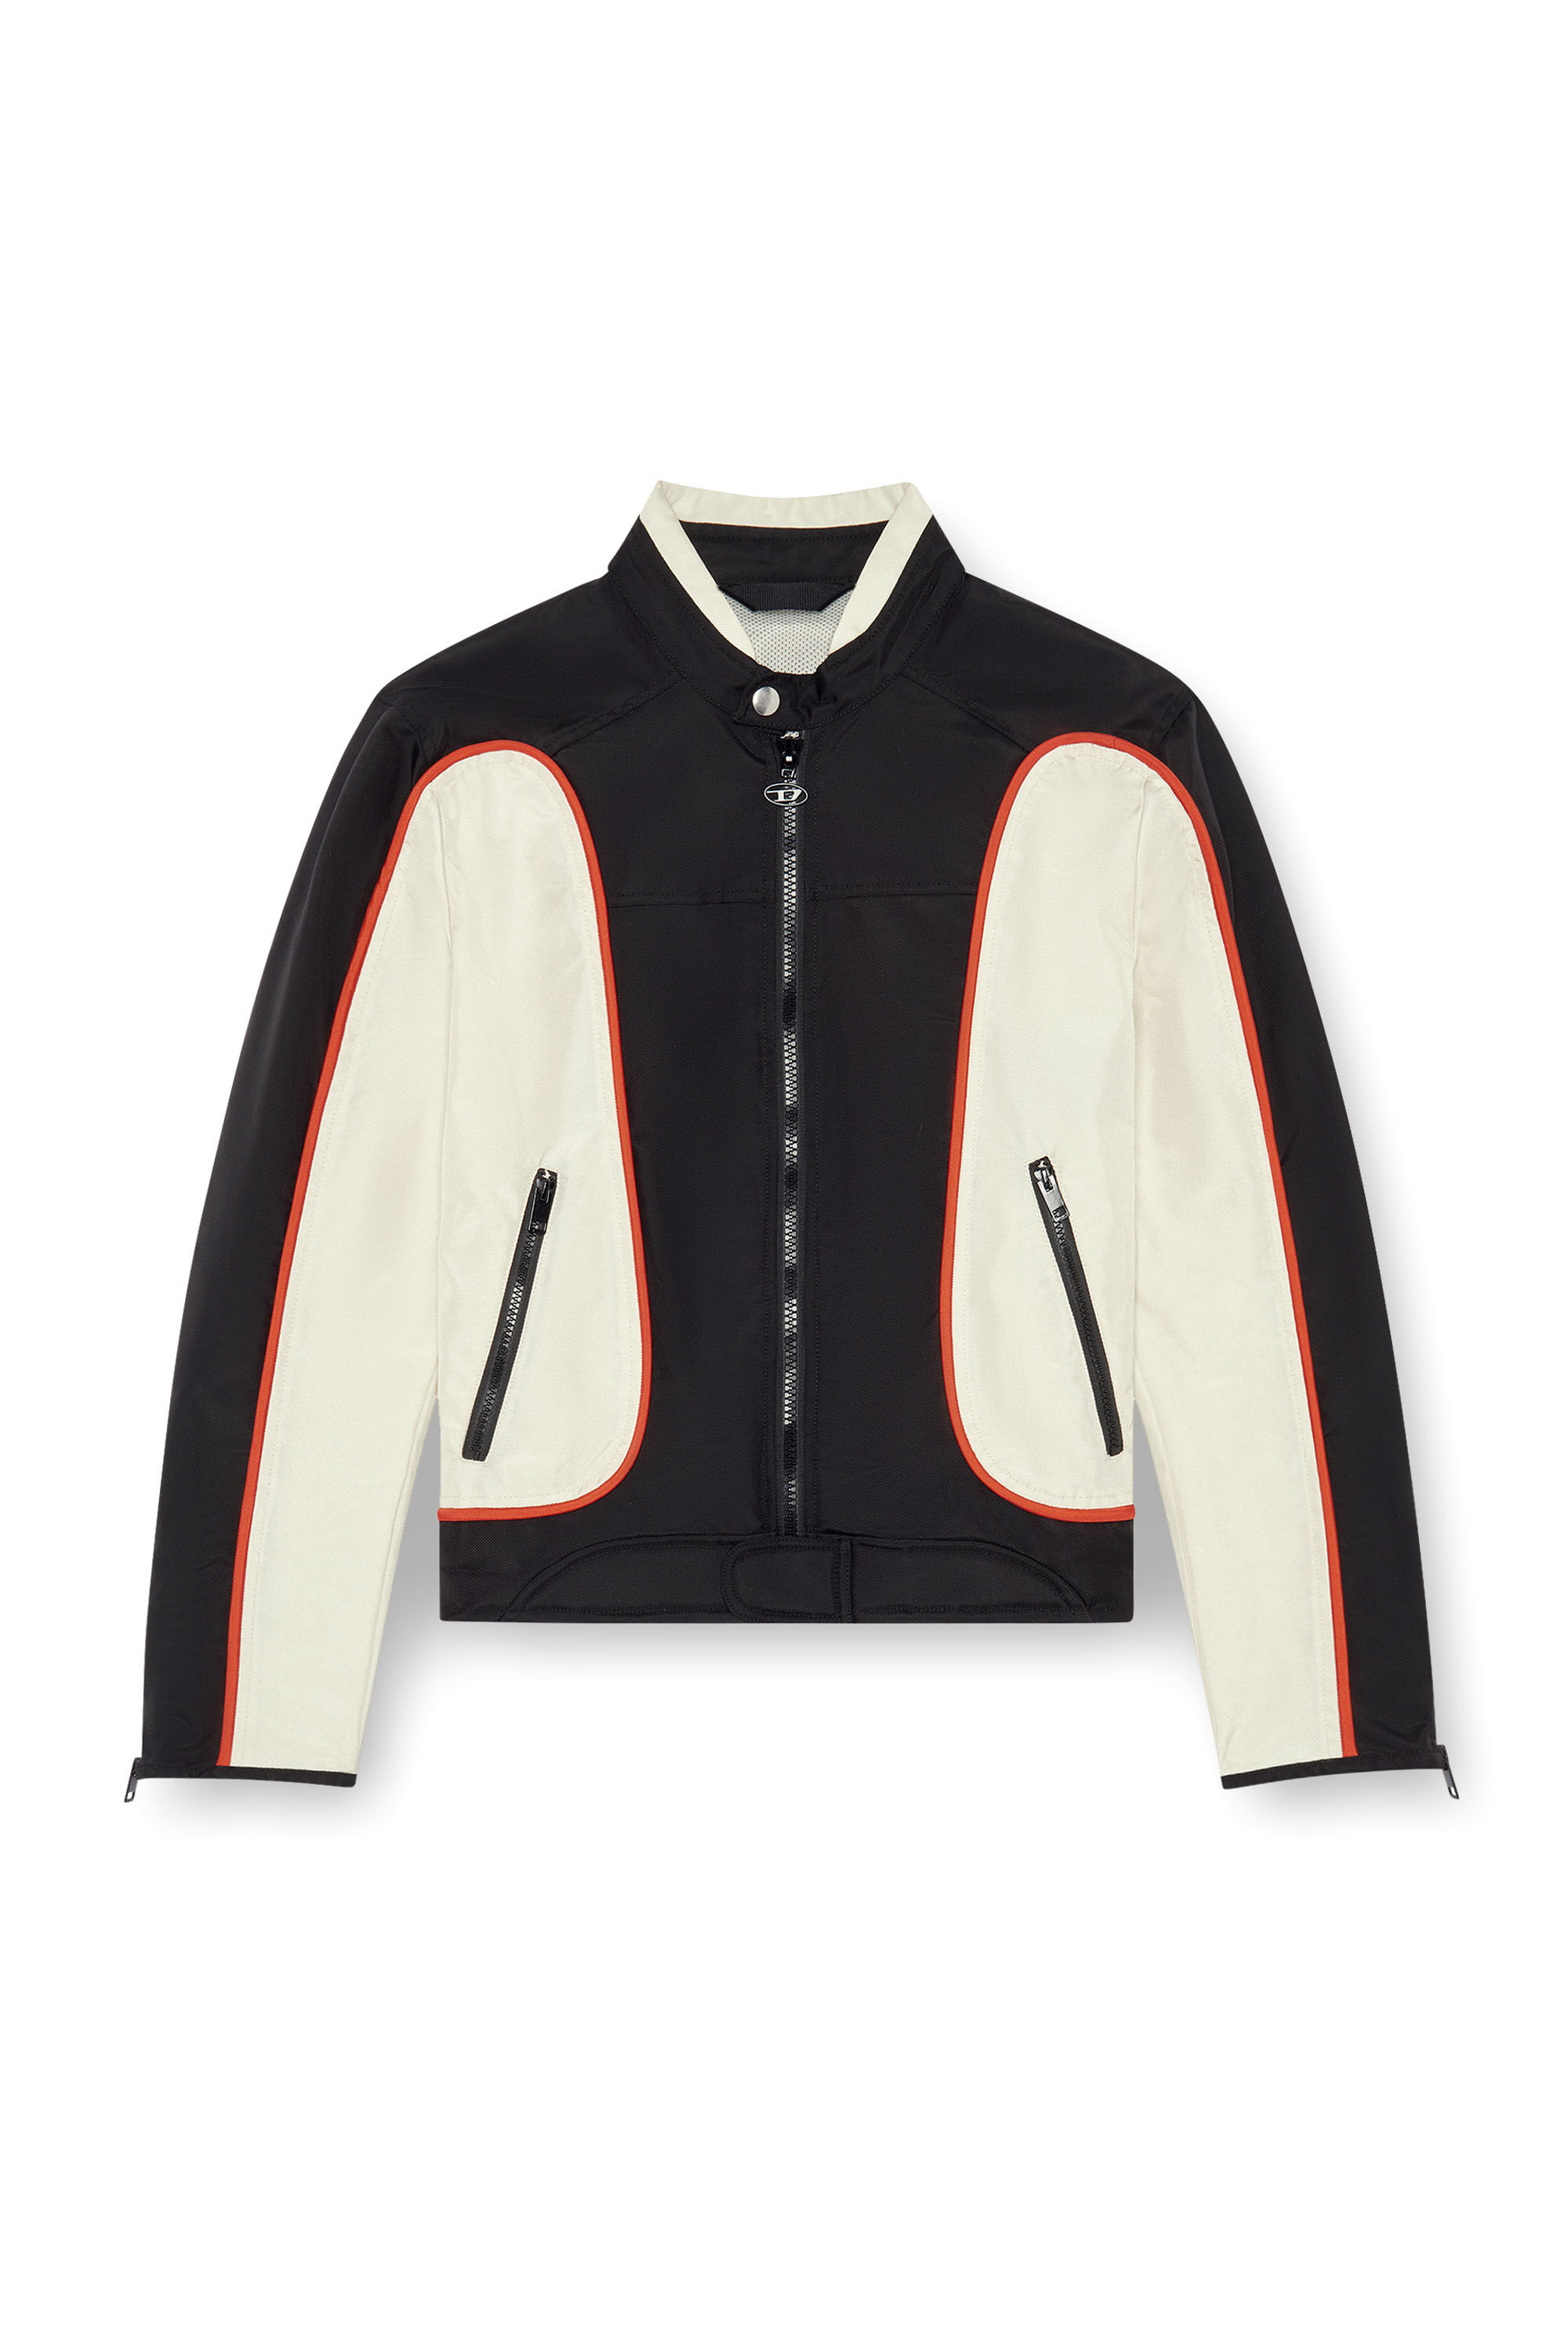 Diesel - J-BLINK, Man Biker jacket in colour-block nylon in Multicolor - Image 2